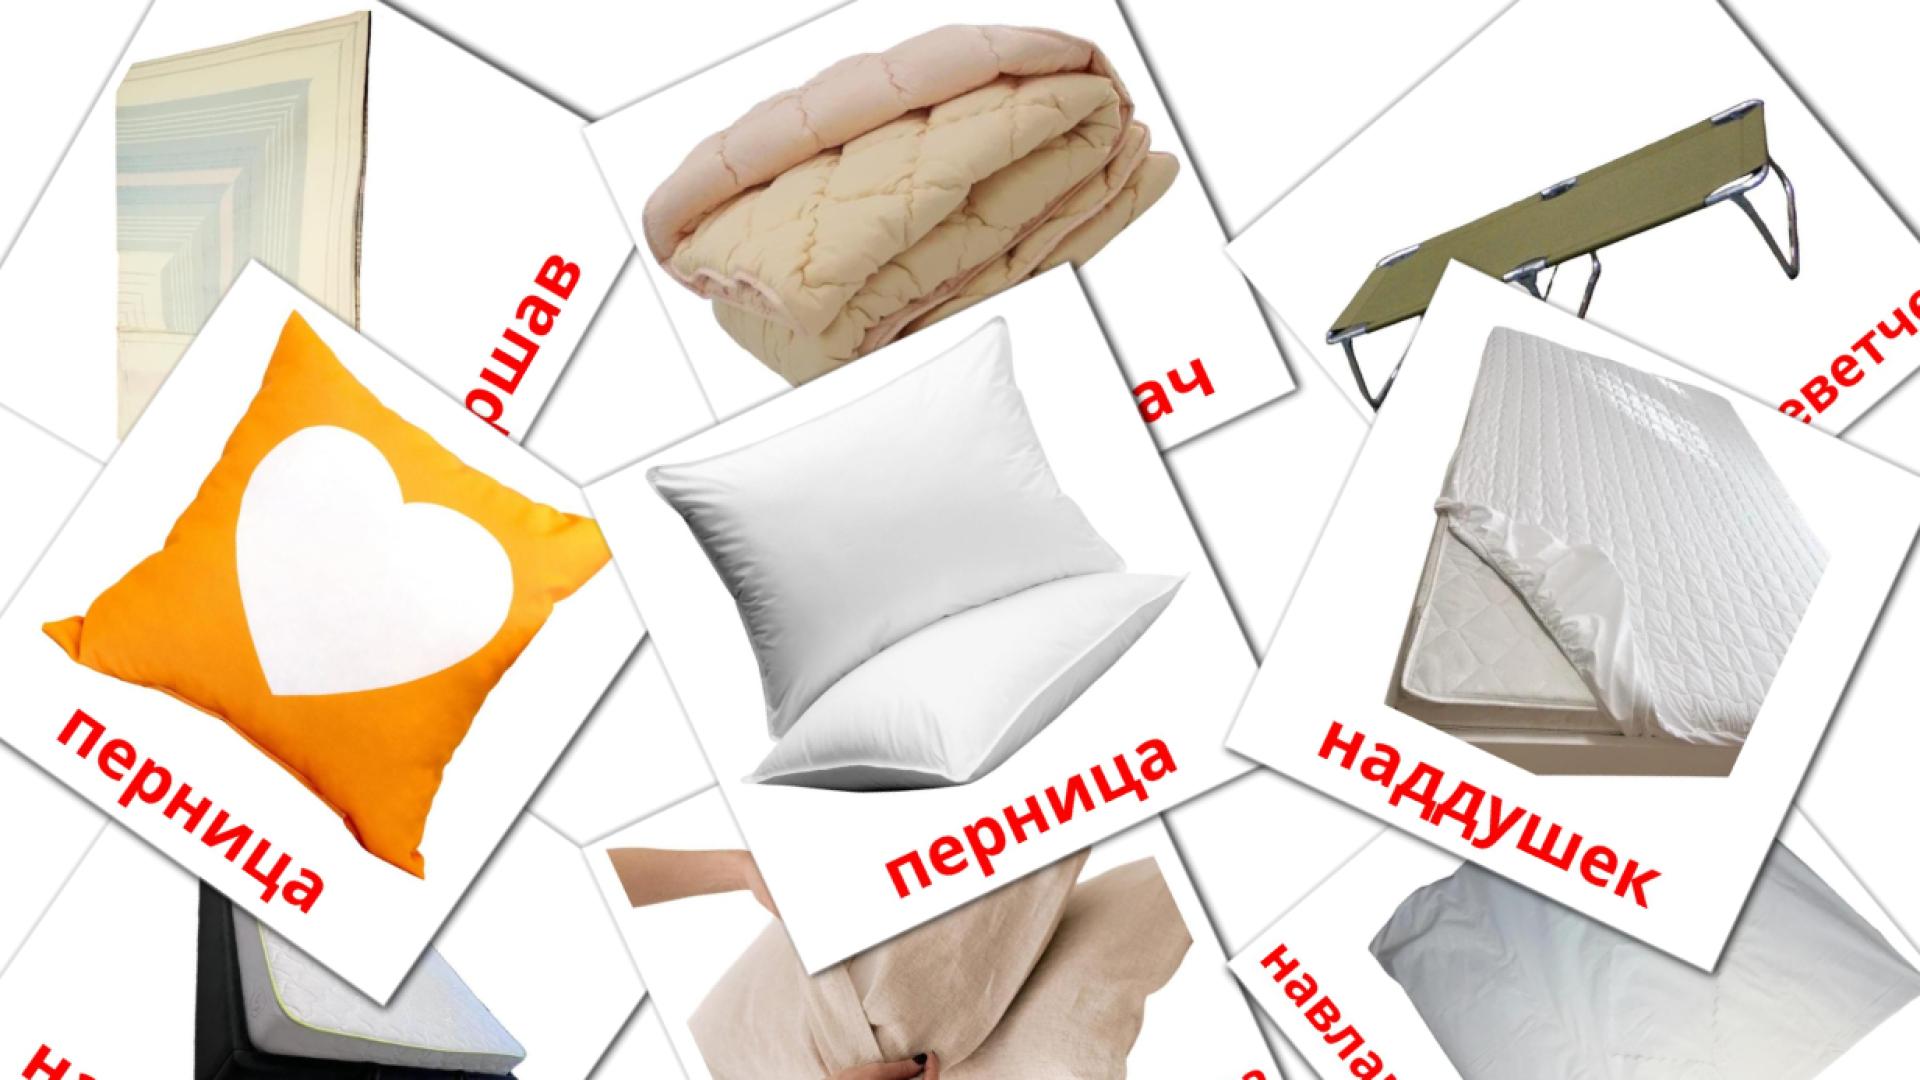 Спална соба macedonian vocabulary flashcards